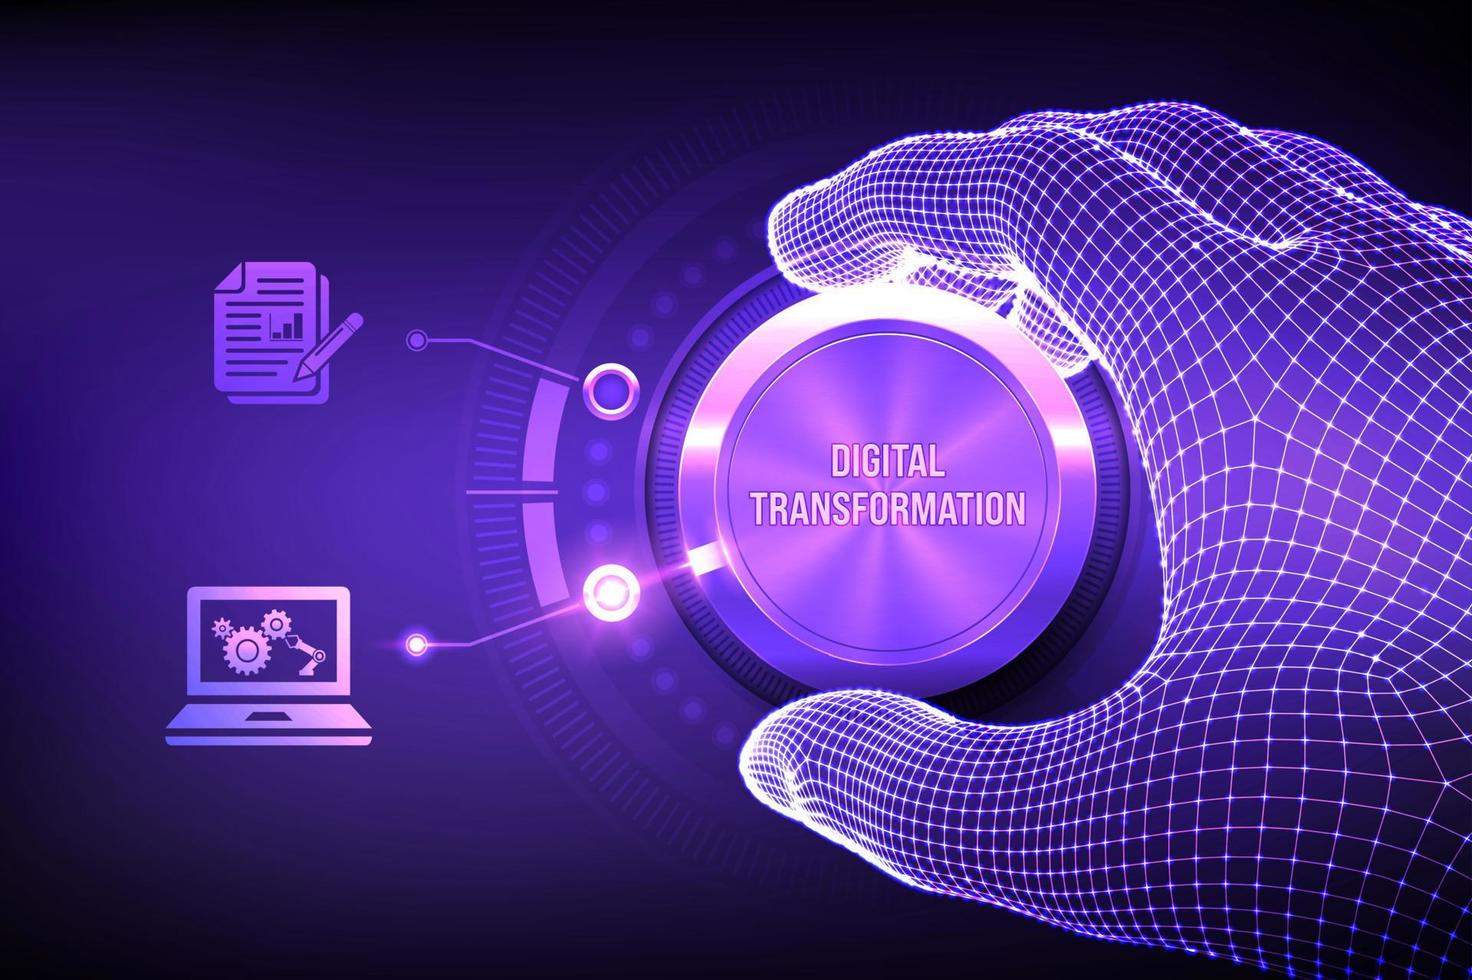 FutureShift Media platform enabling collaboration for all digital transformation actors